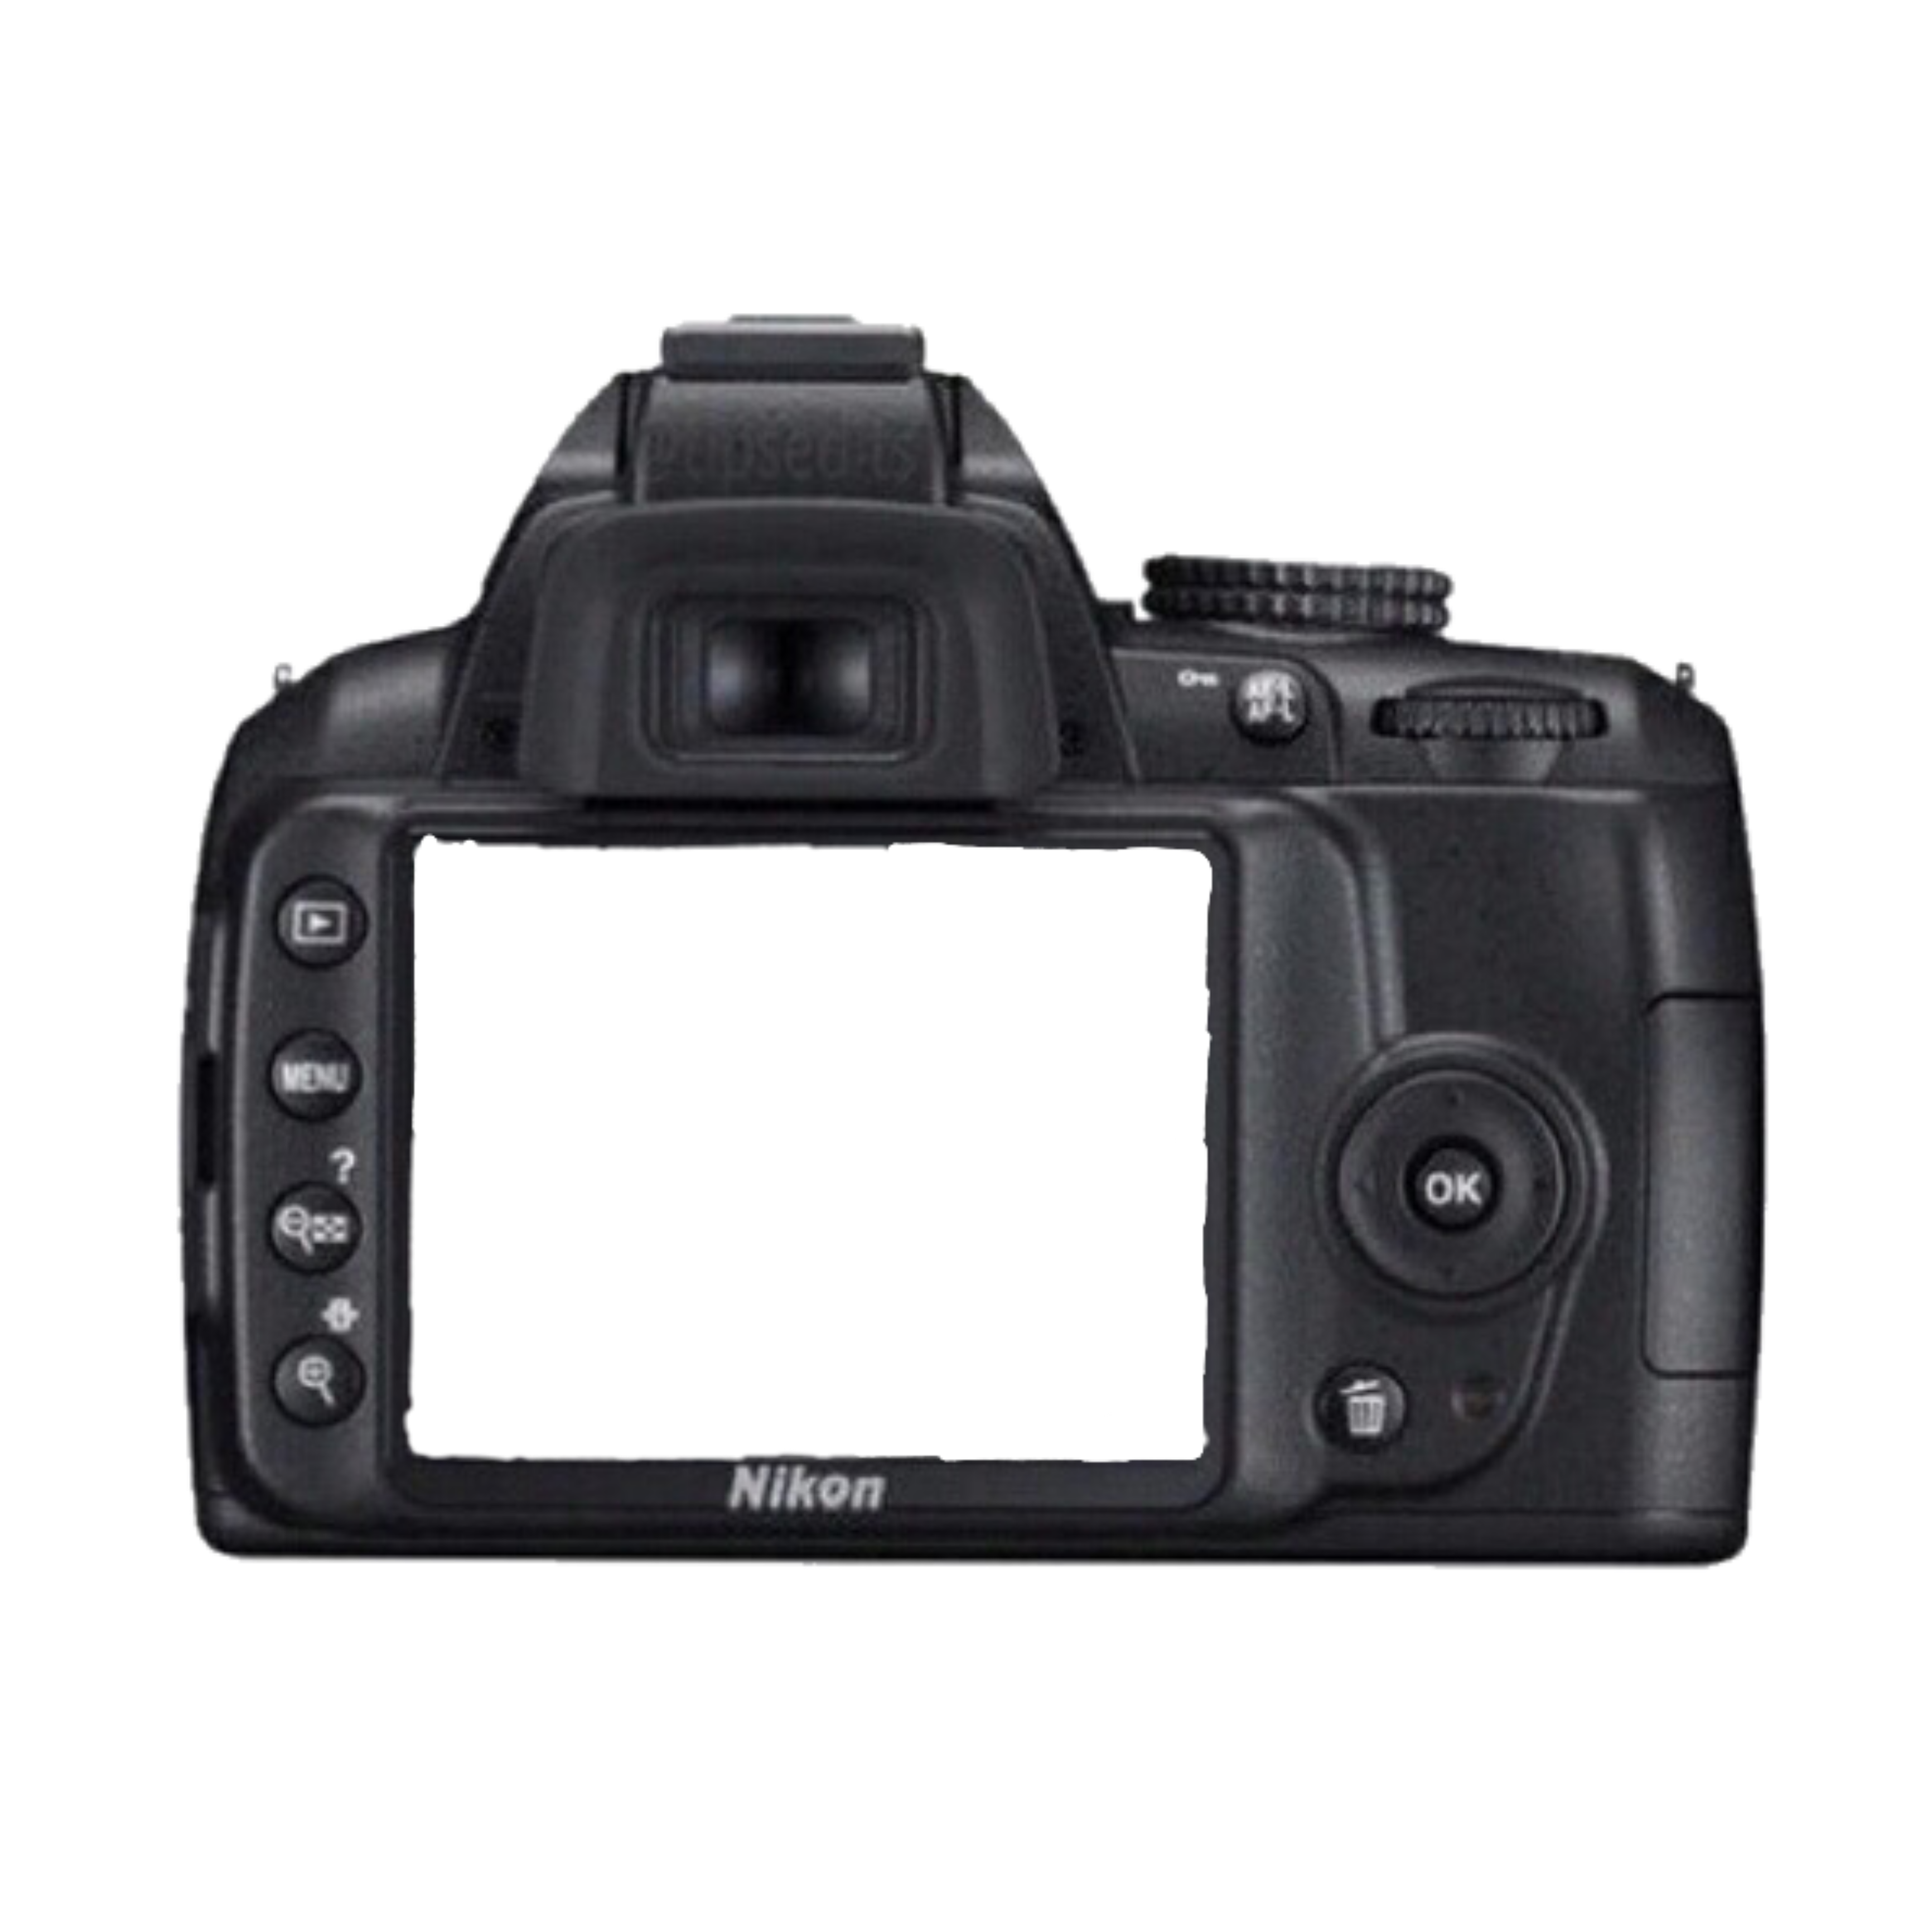 Ox zung camera footage. Фотоаппарат Кэнон 3000d. Кэнон 3000 фотоаппарат. Пленочный фотоаппарат Canon 3000d. Видоискатель у Nikon d600.